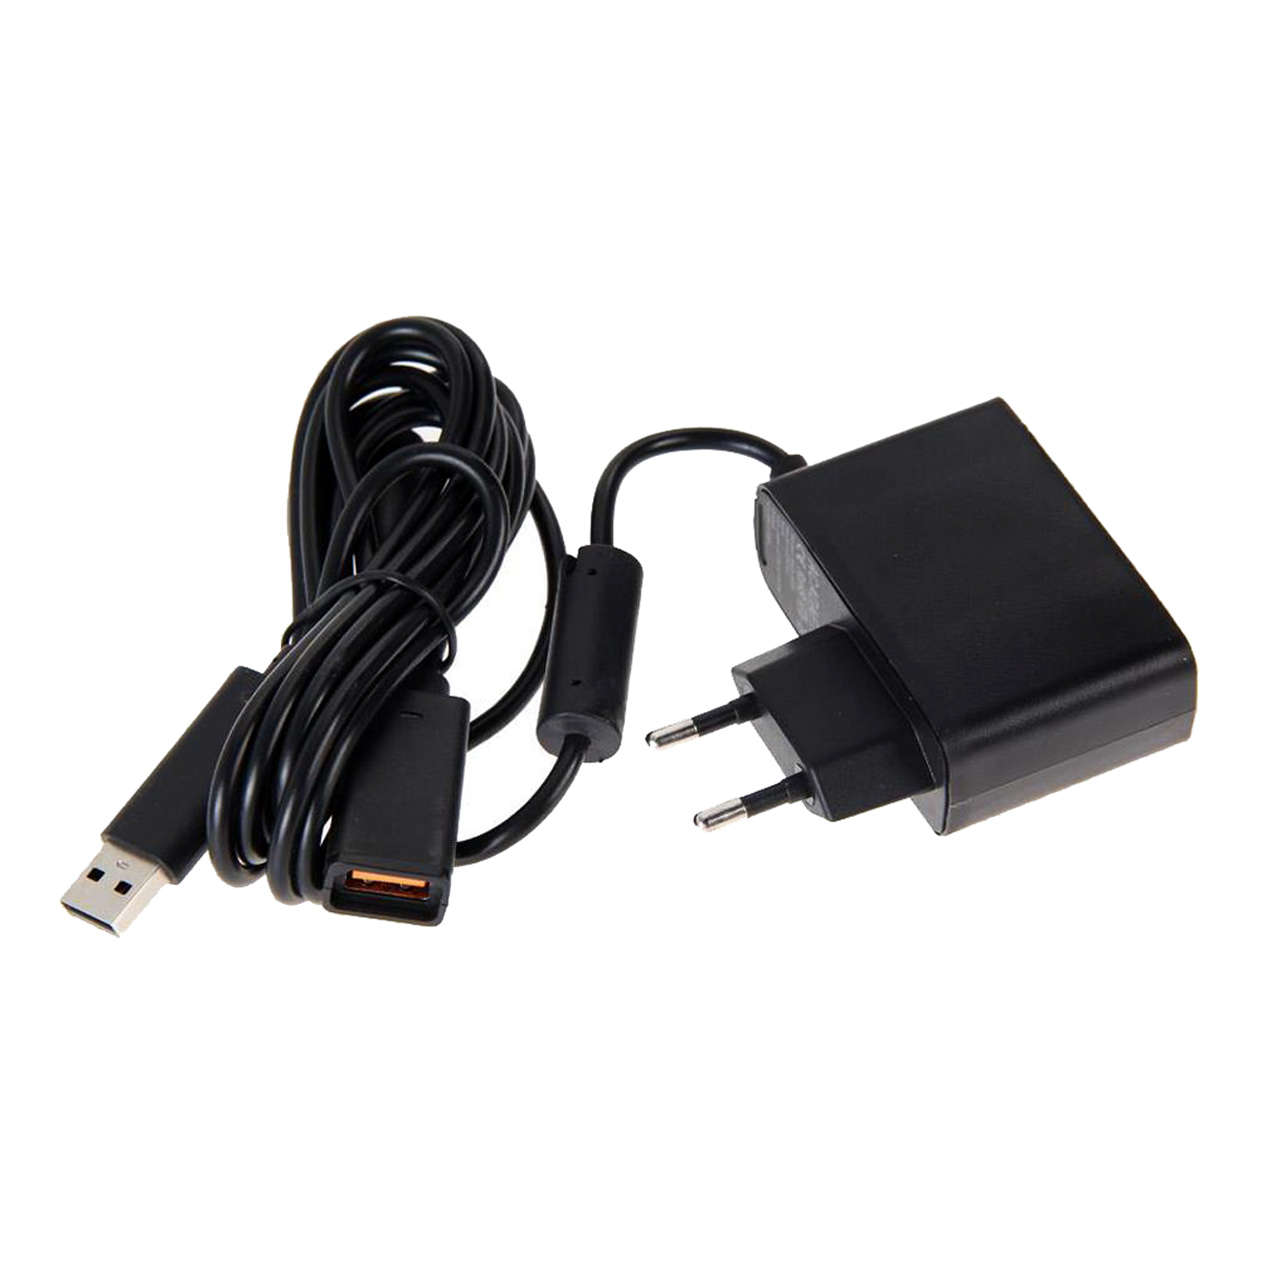 آداپتور کینکت ایکس باکس 360 با کابل USB 

Xbox 360 Kinect AC Power Adapter